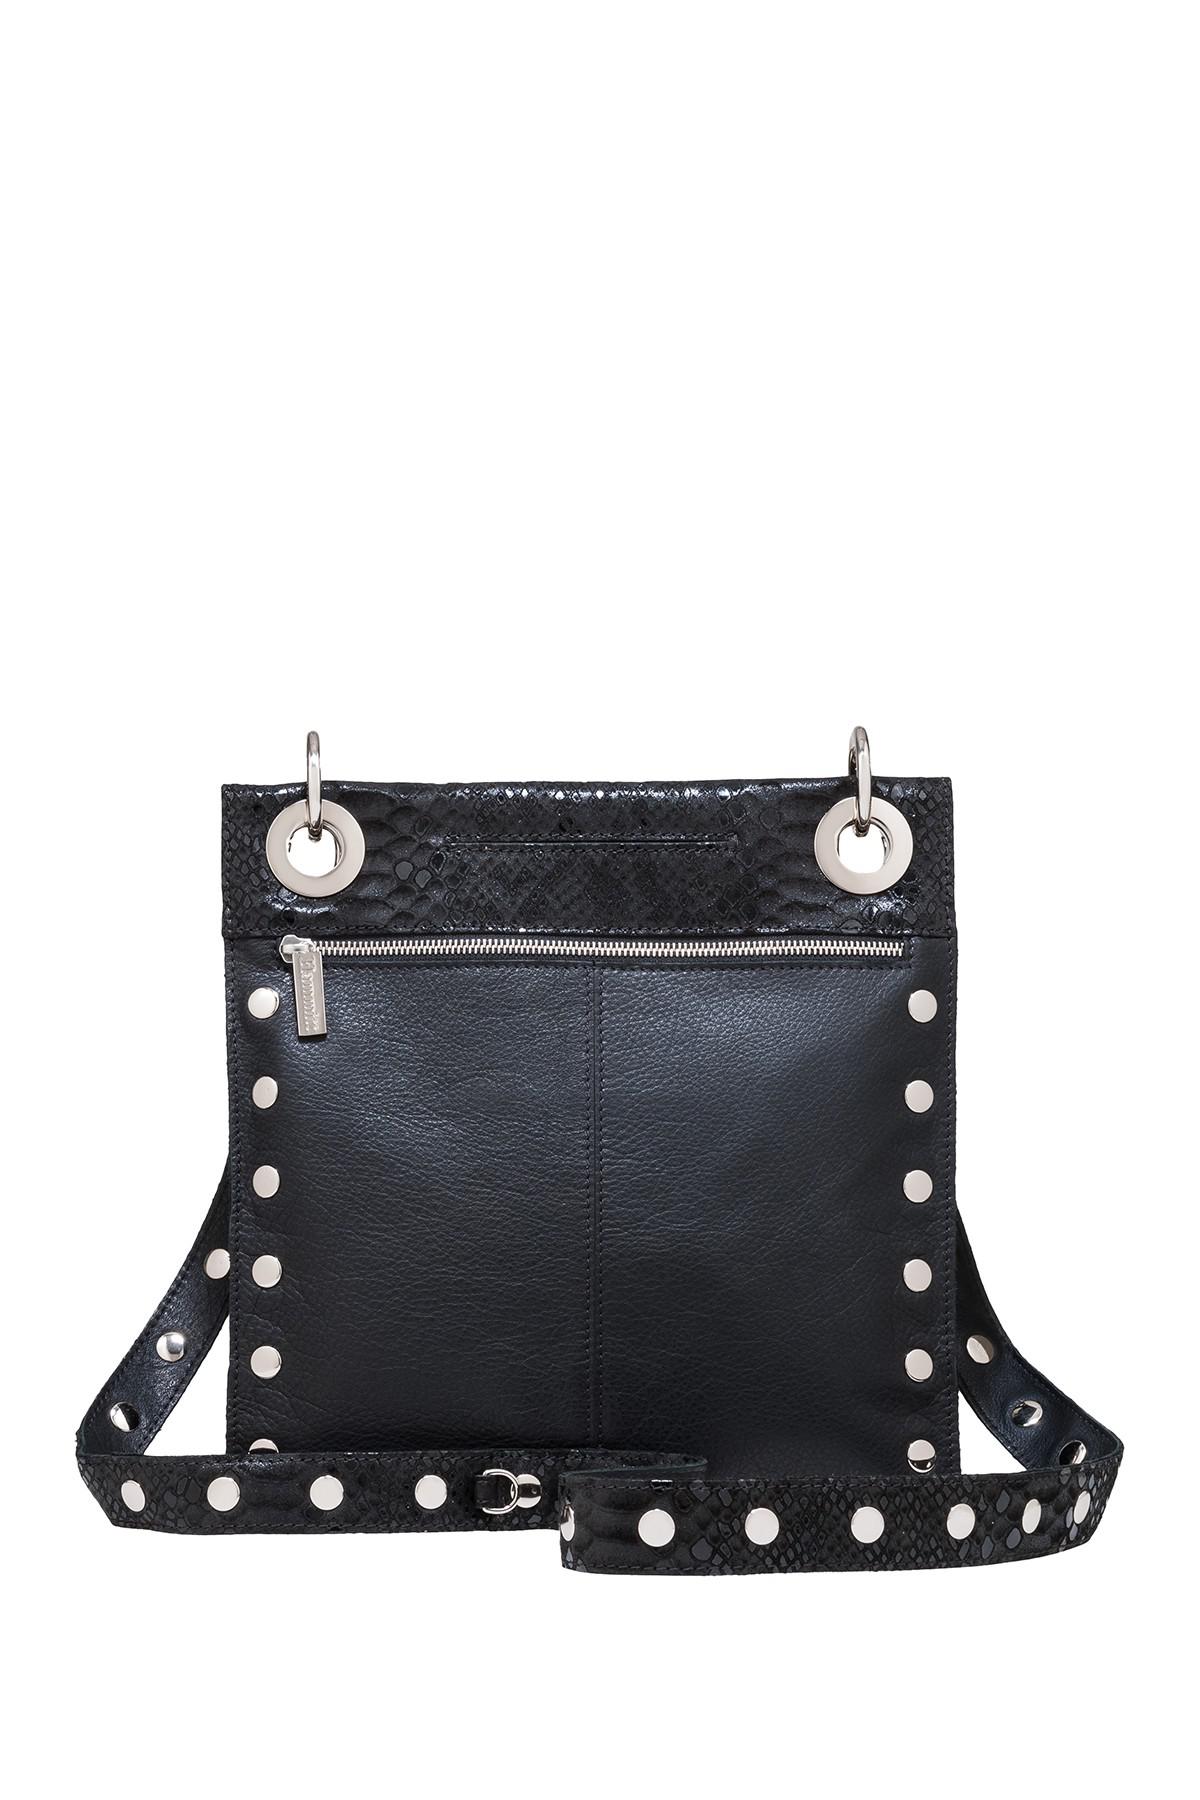 Hammitt Montana Studded Leather Crossbody Bag in Black - Lyst